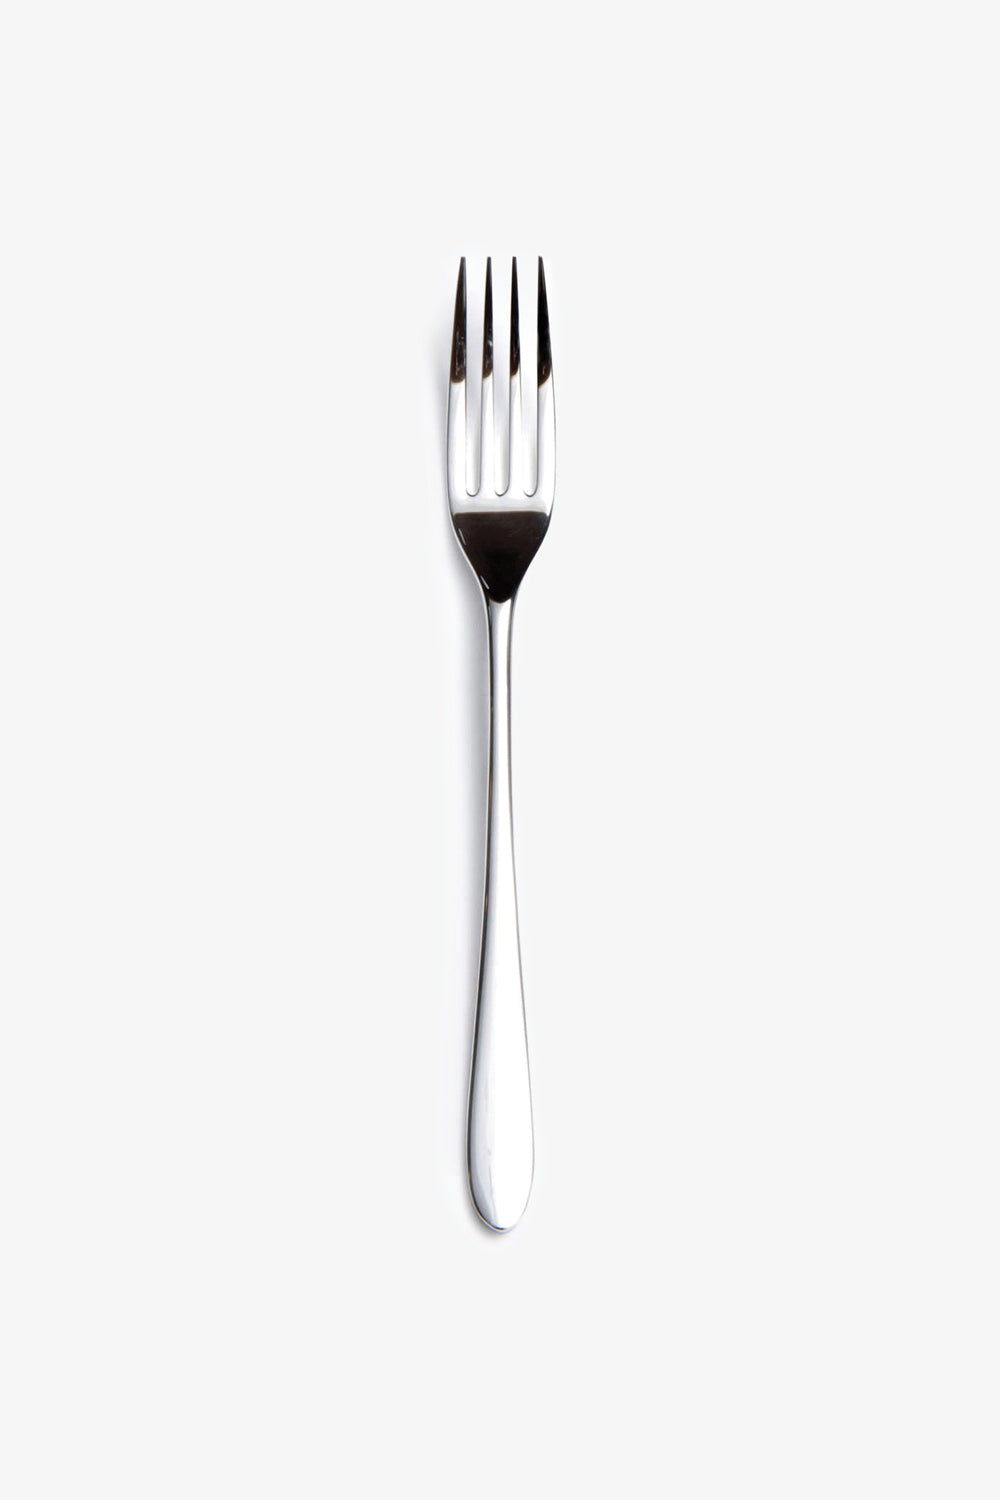 Alabama Chanin David Mellor Pride 5-piece Stainless Set Dinner Fork